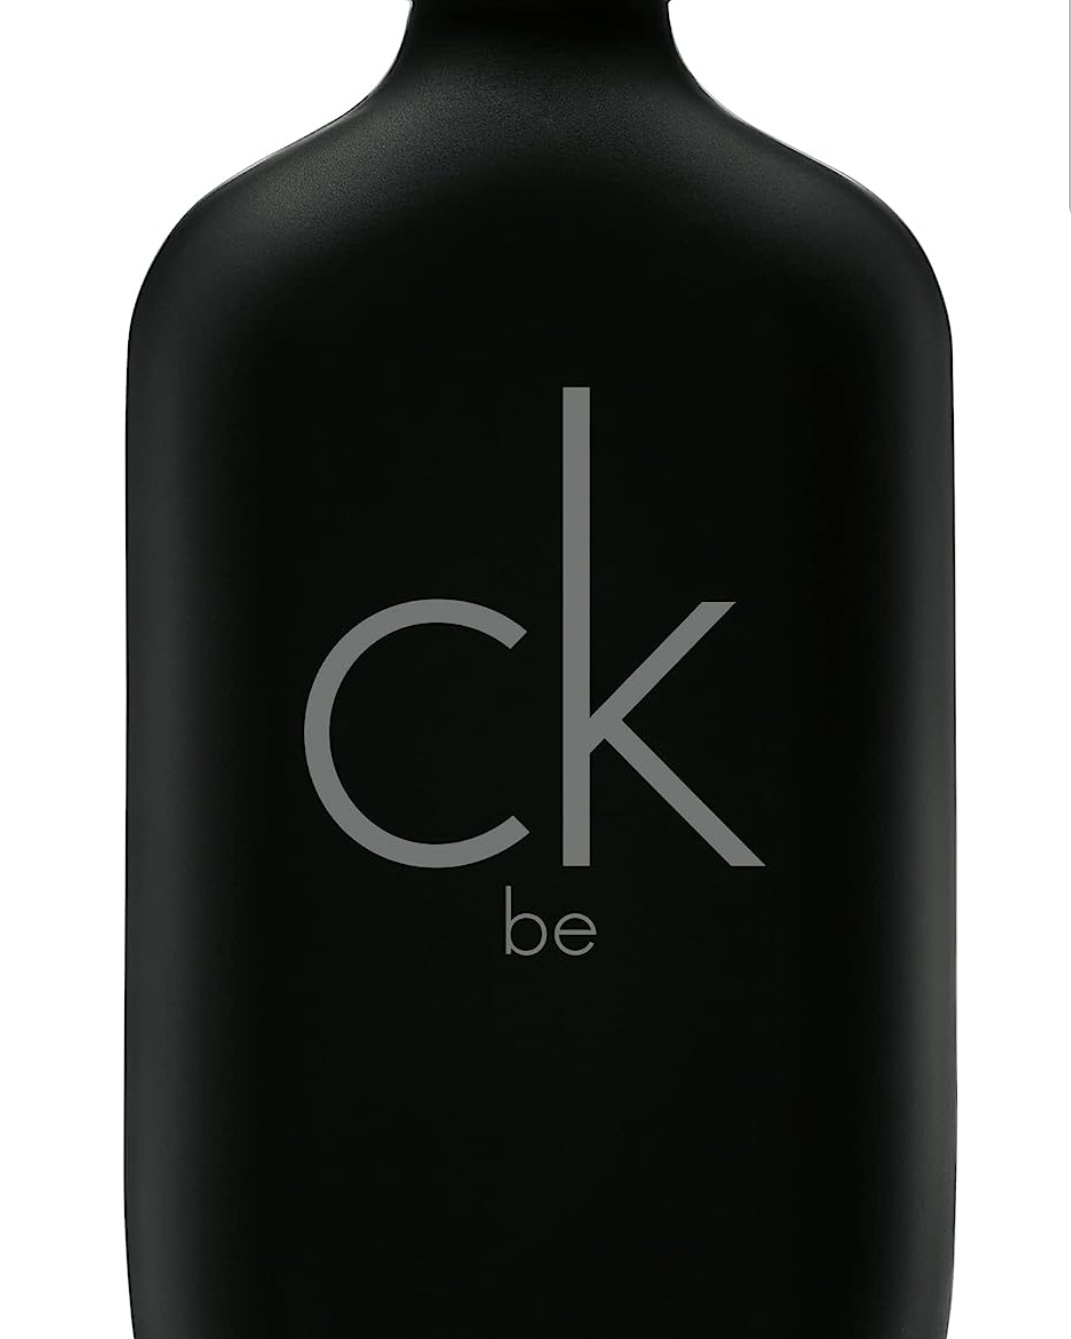 Calvin Klein CK Be - Perfume for Men & Women 100 mls